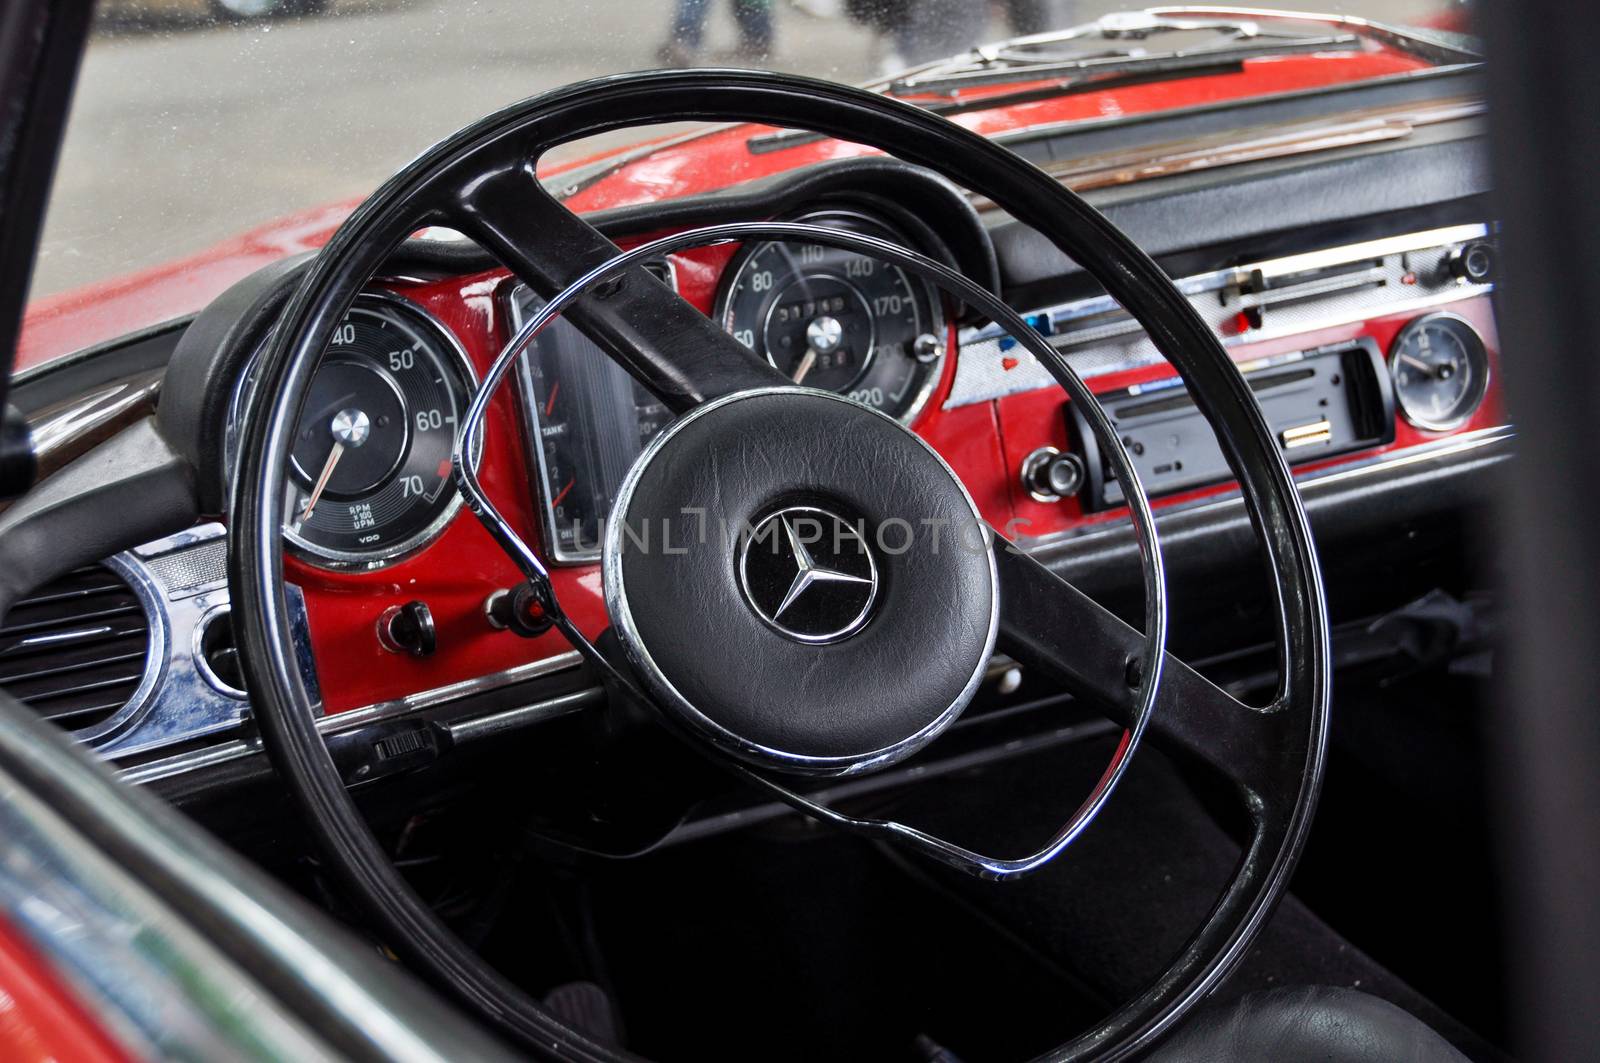 Classic red Mercedes interior by dutourdumonde